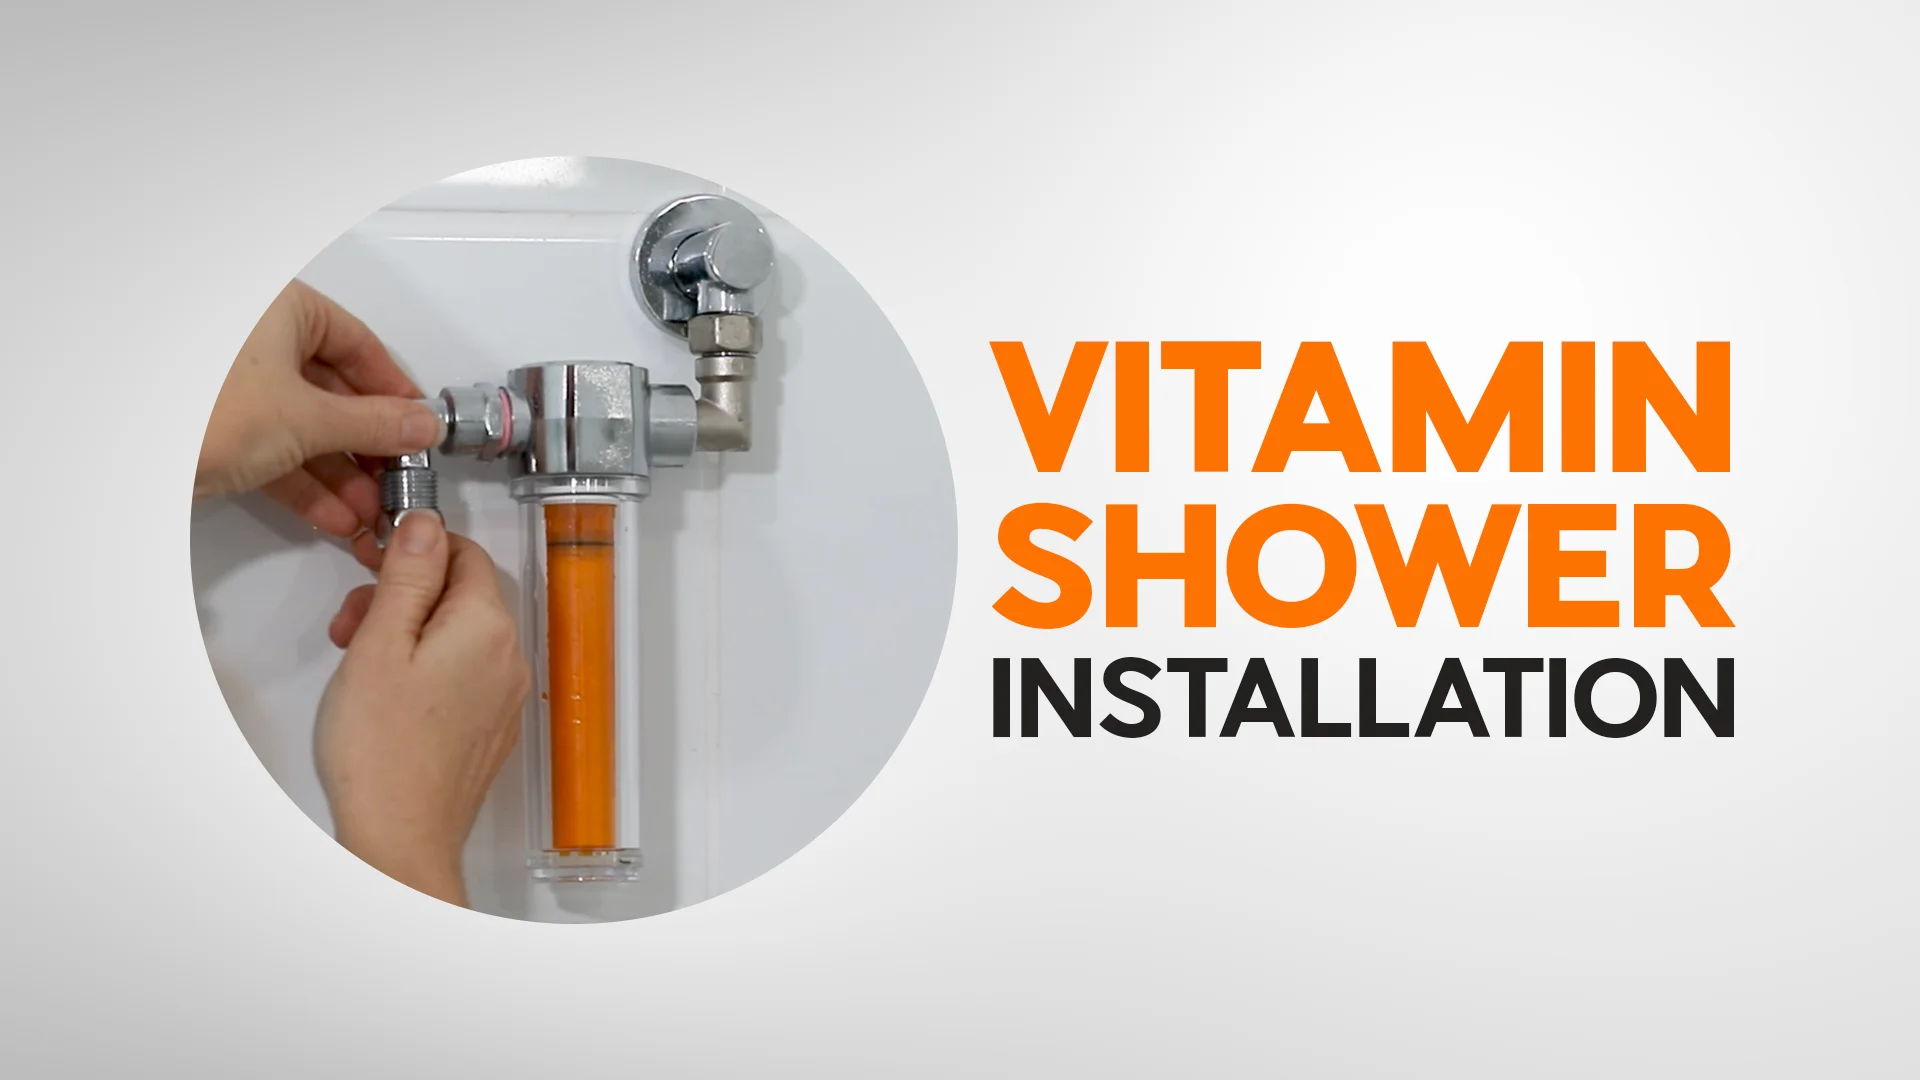 Vitamin Shower Installation on Vimeo